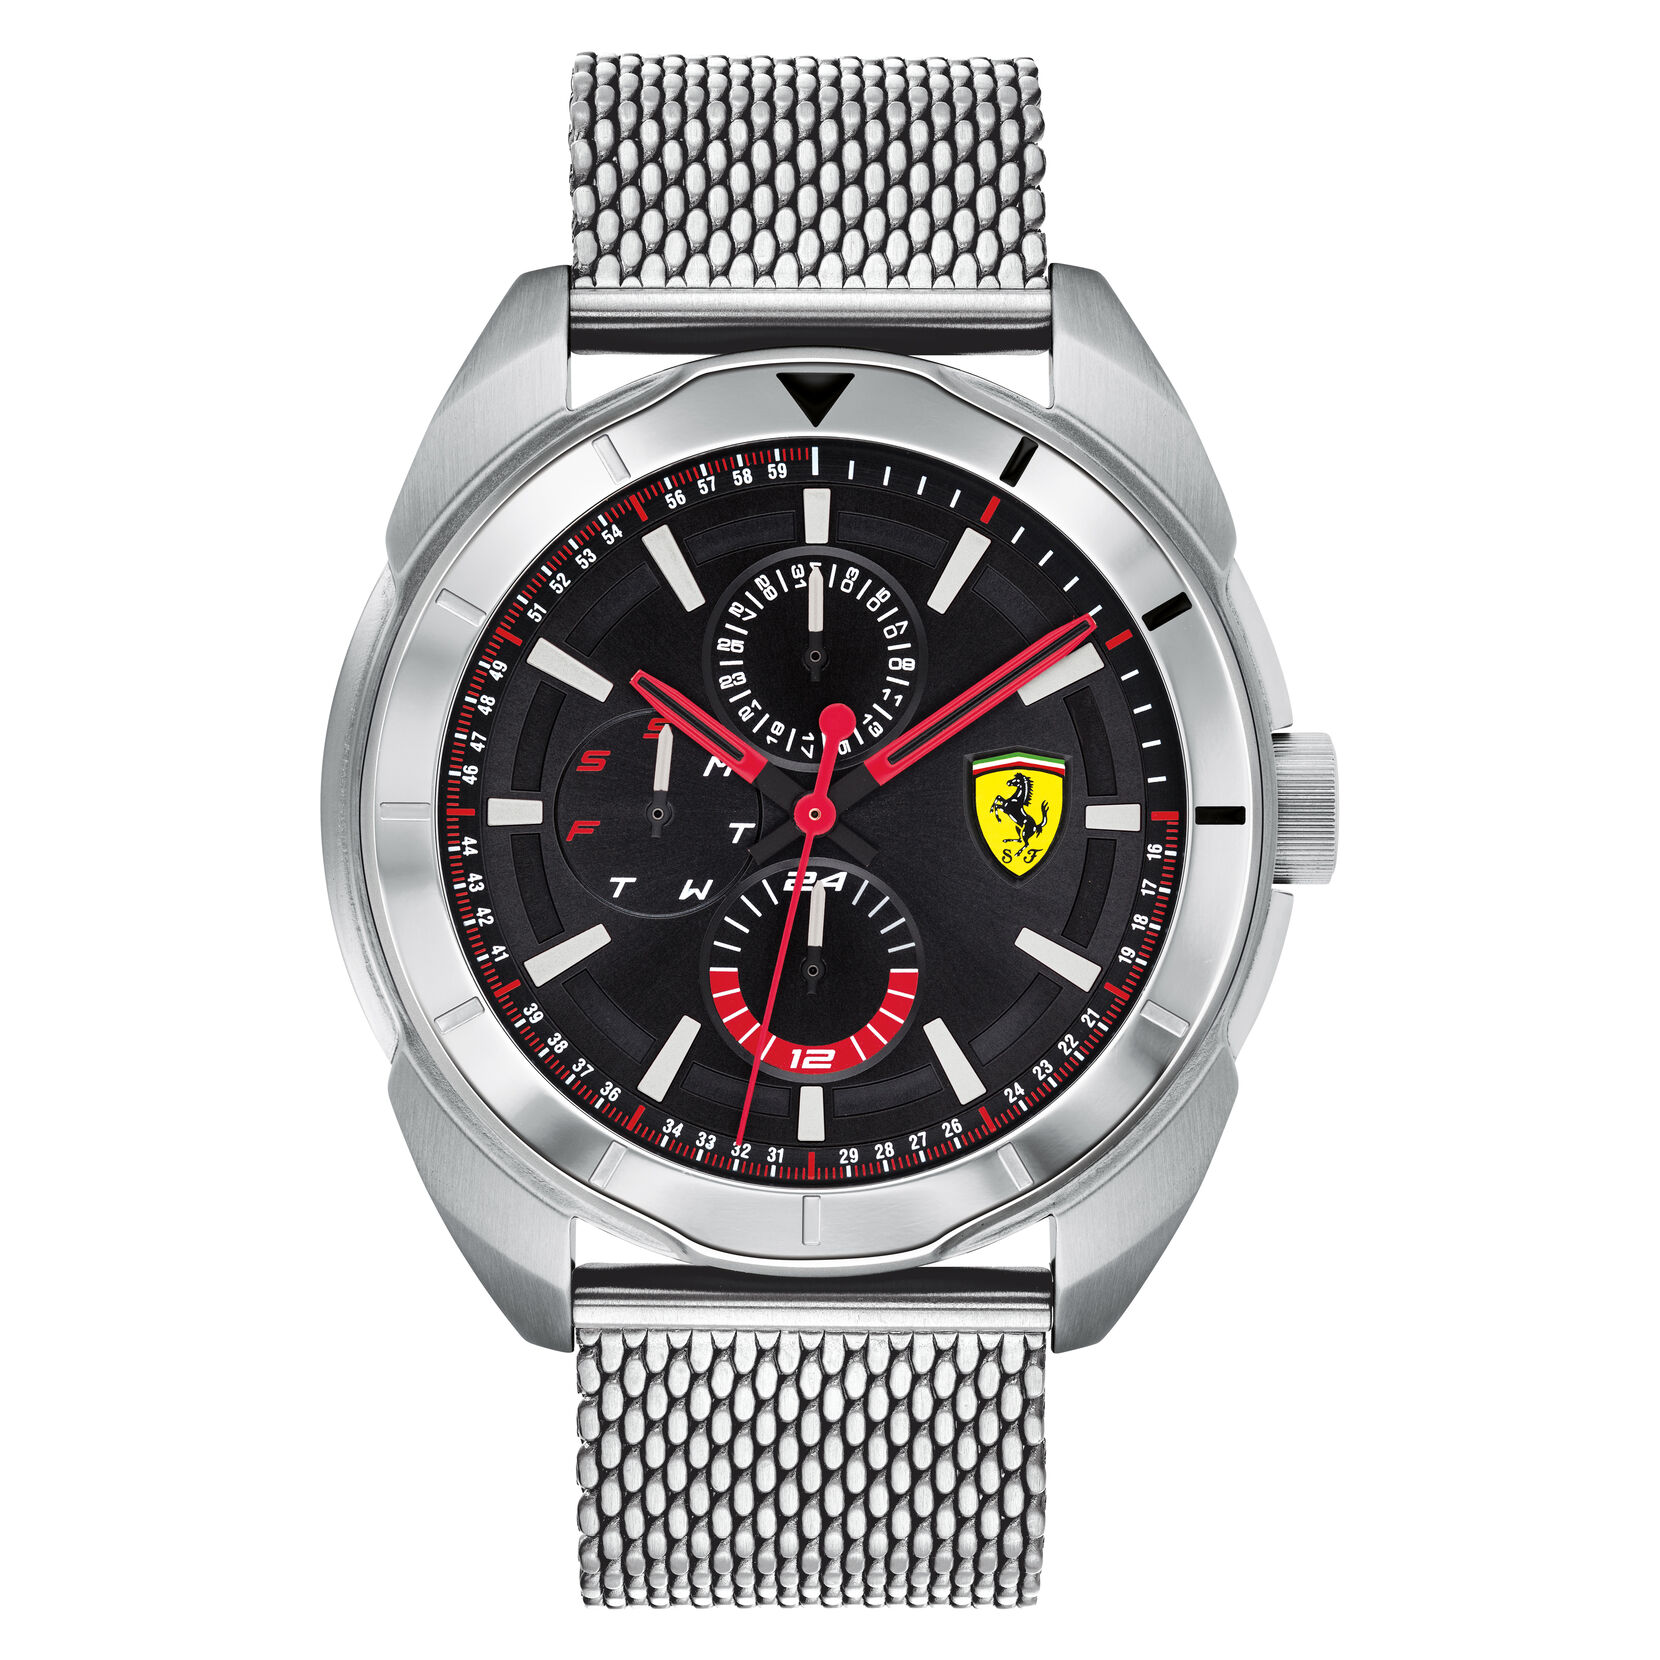 Scuderia Ferrari Forza Men's Watch, 45mm